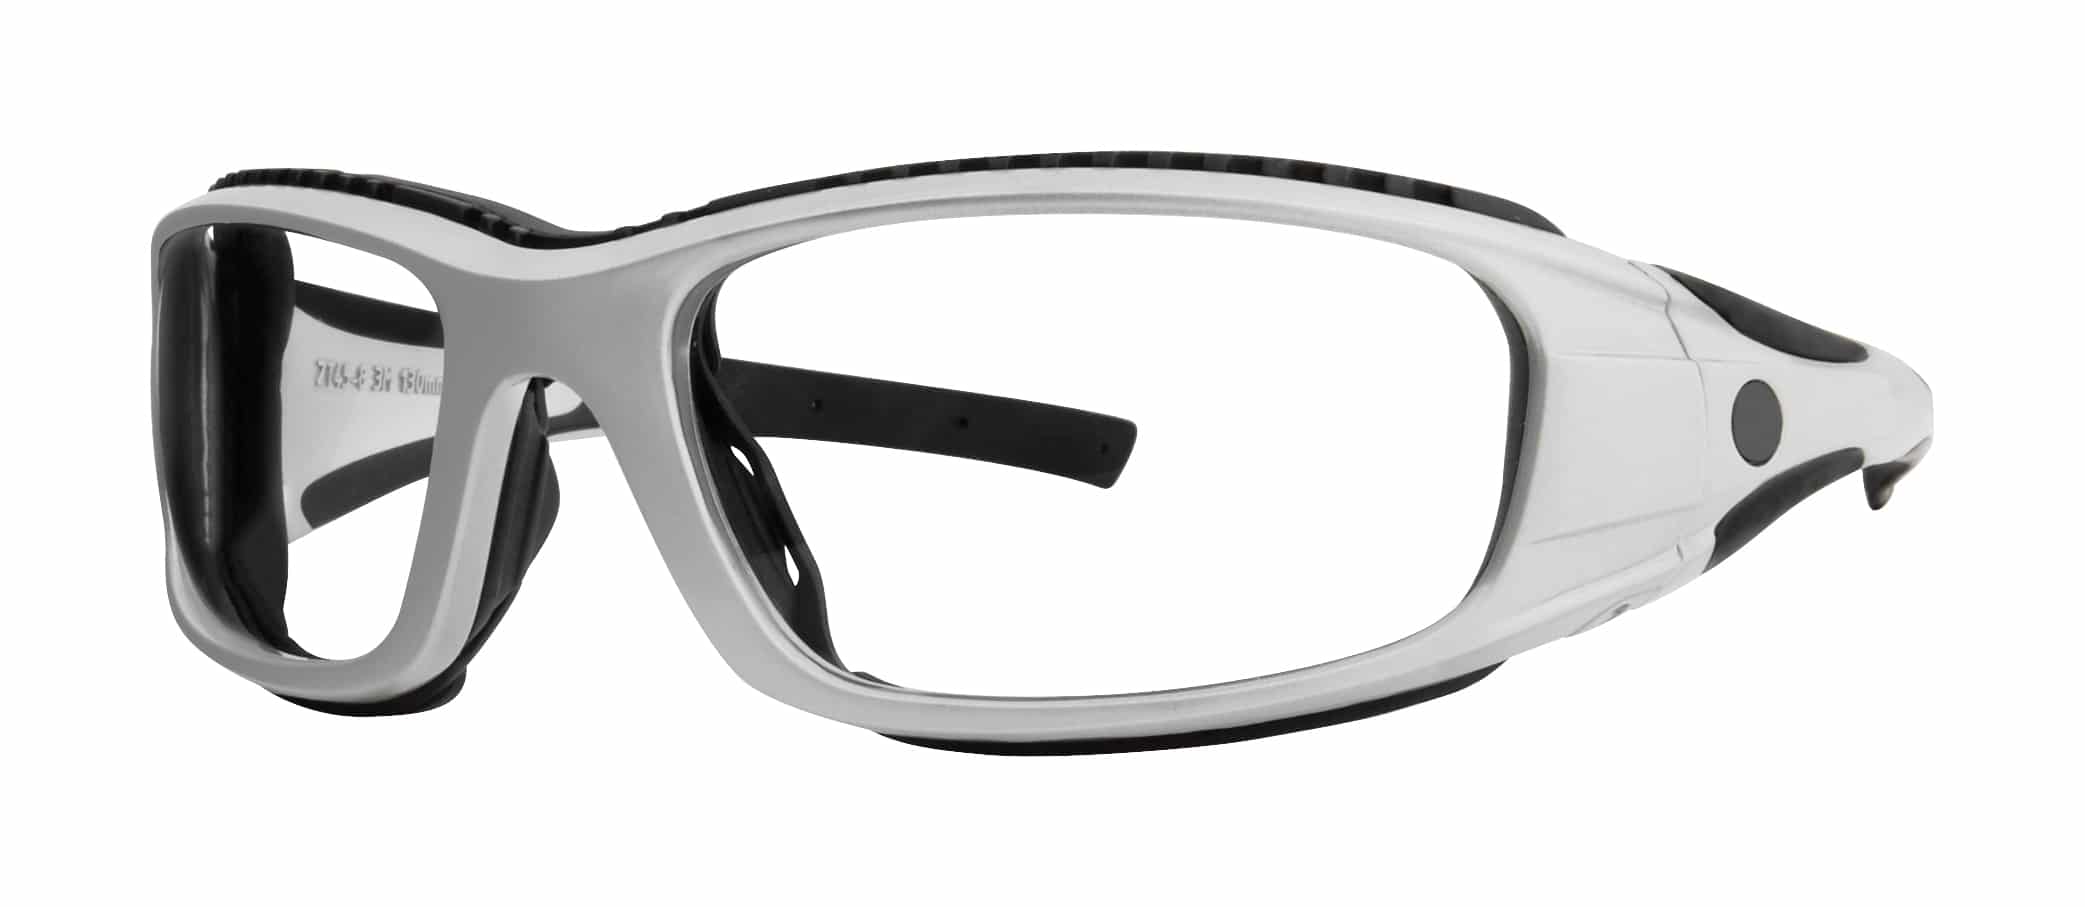 Pentax/3M Safety Rx Eyewear Camo with extra Foam seals-Popular Style NEW  